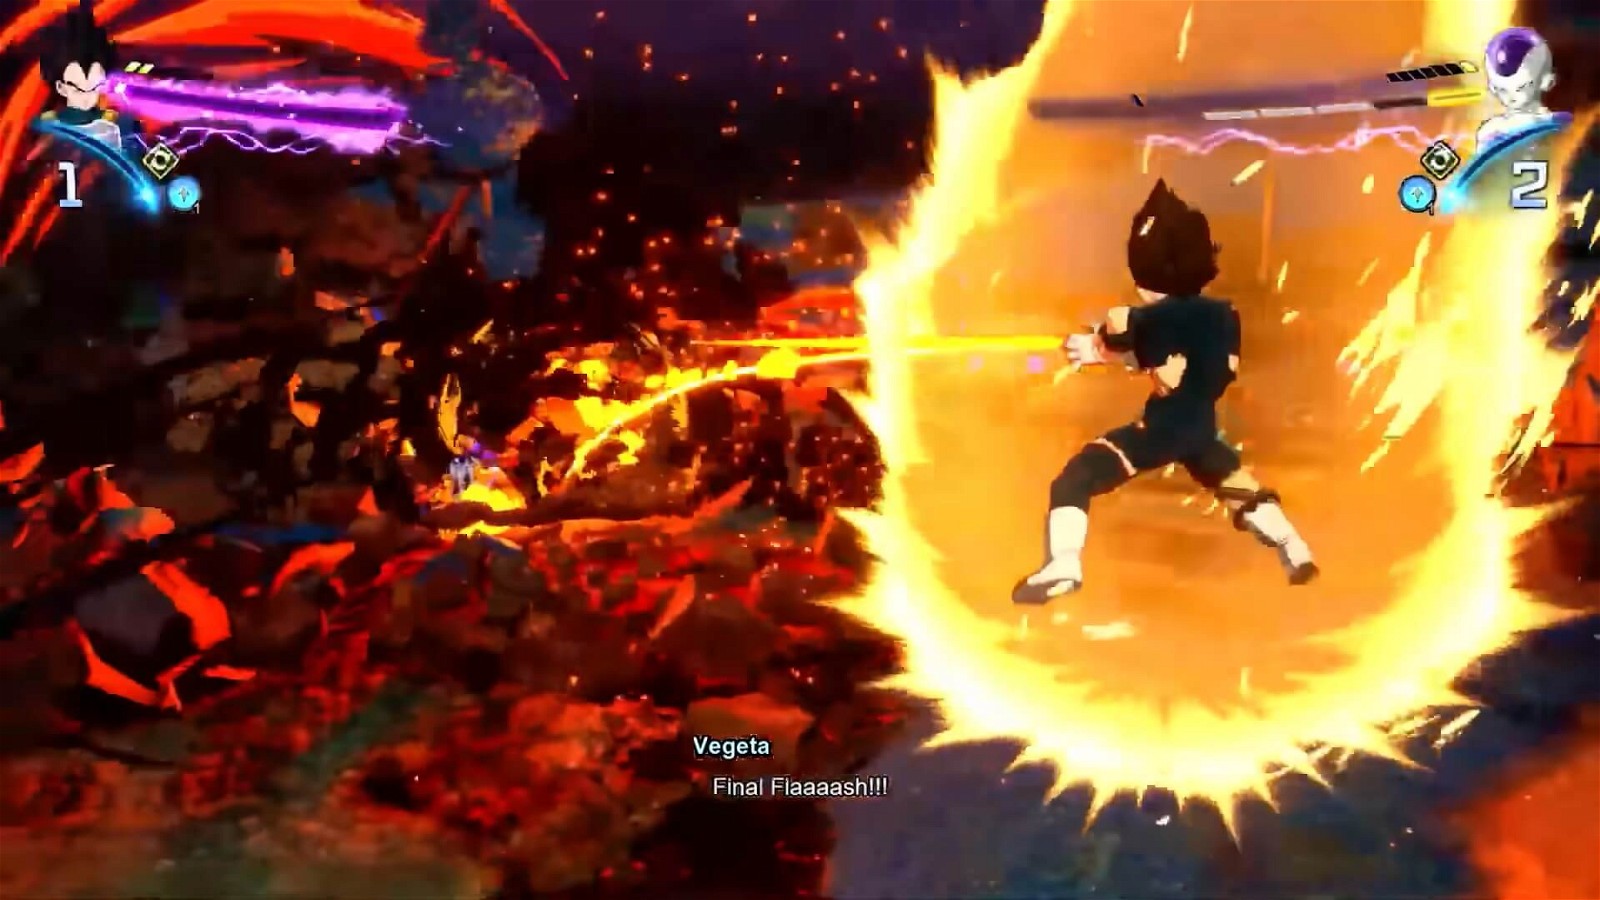 Vegeta uses Final Flash against Frieza on Planet Namek. Credits: STORM MASTER on YouTube